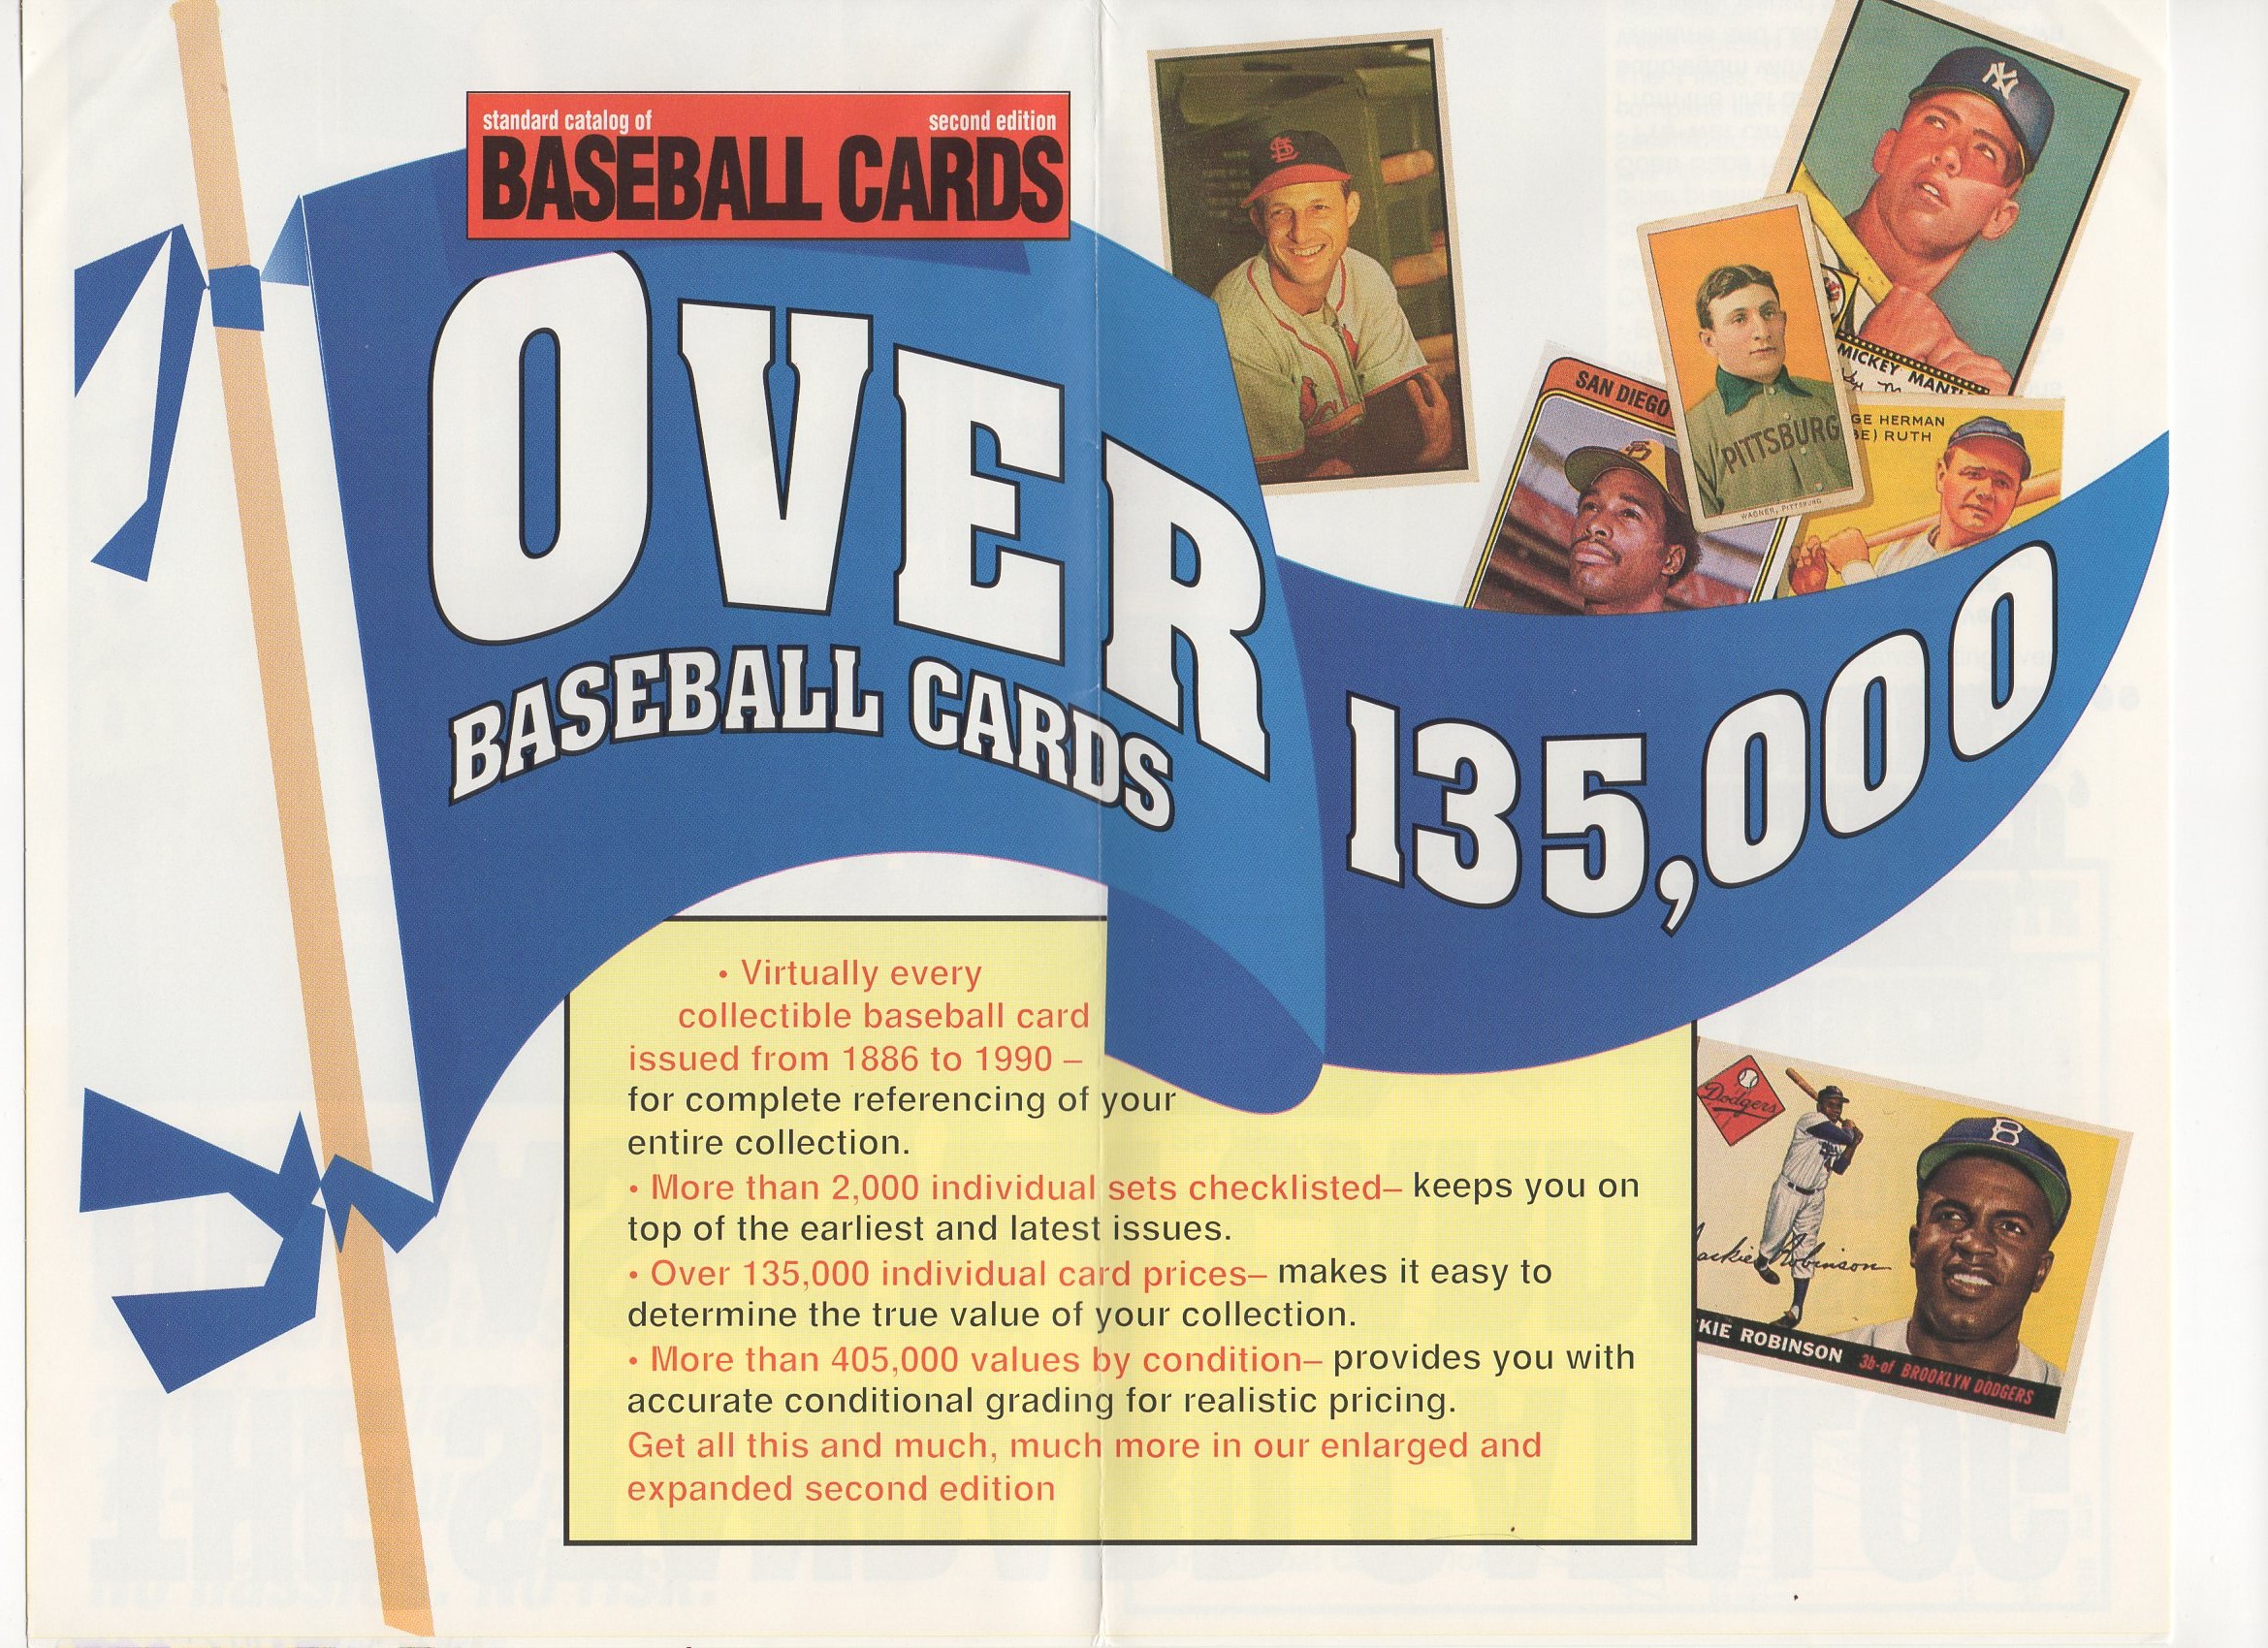 1989 standard BB cards